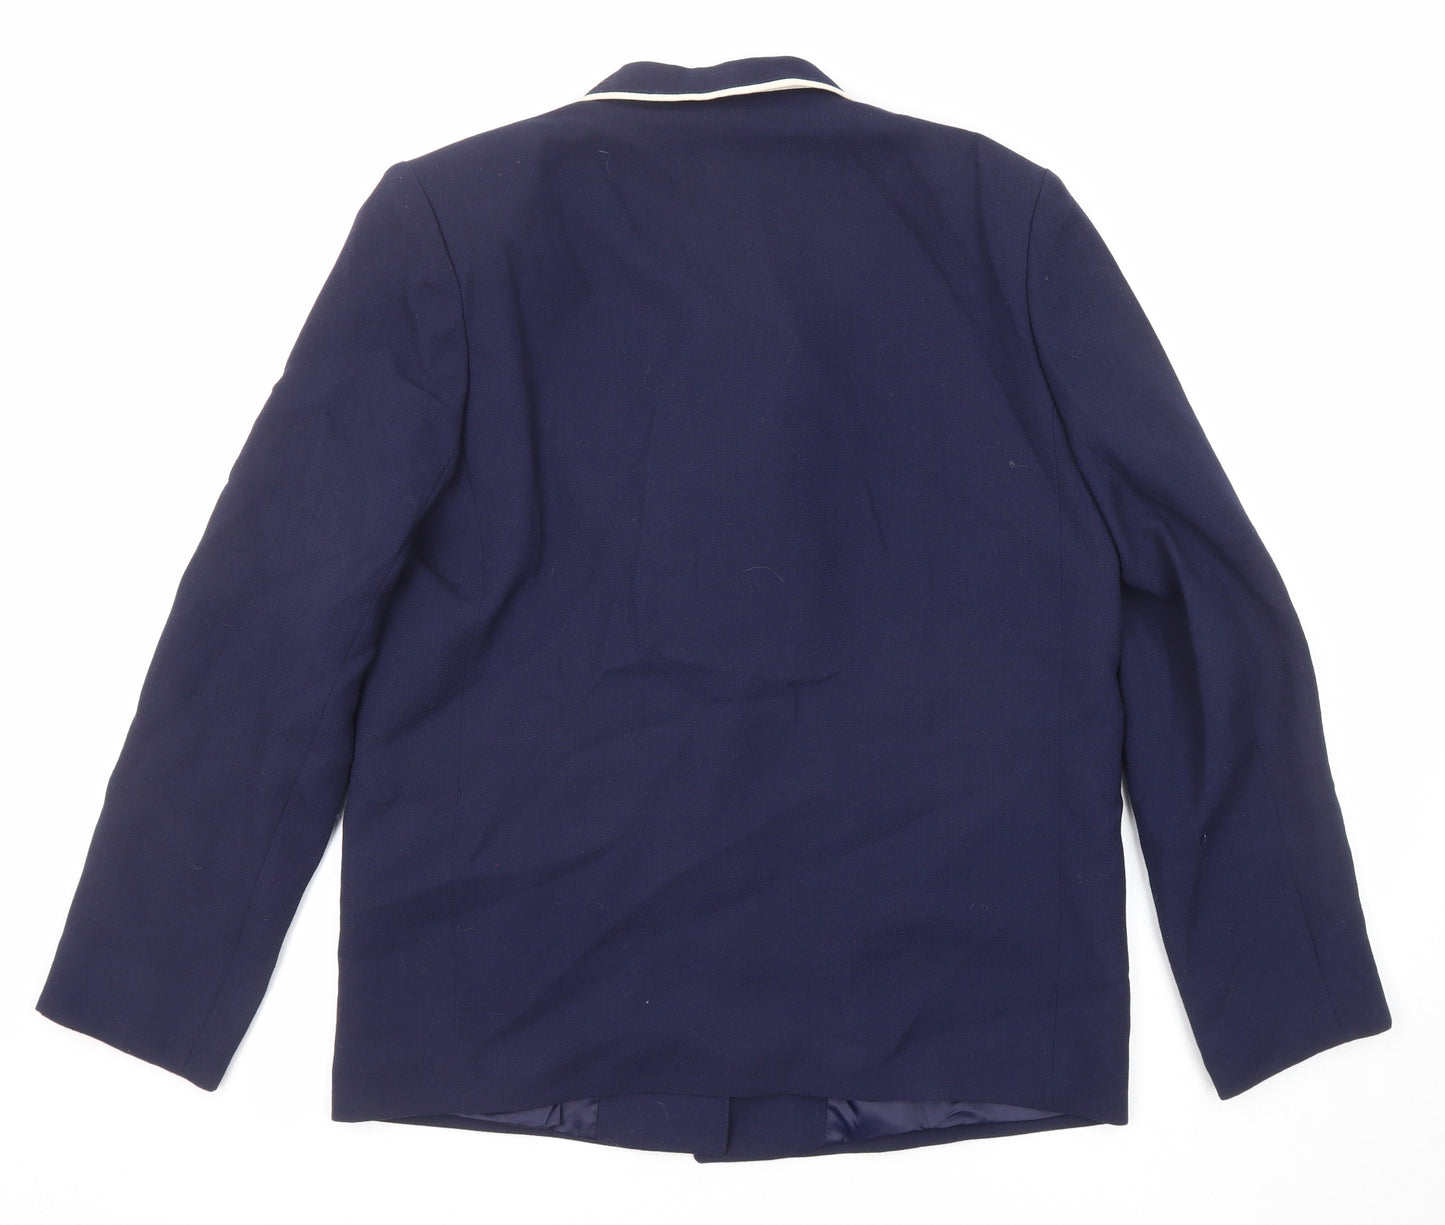 Hodges Womens Blue Jacket Blazer Size 14 Button